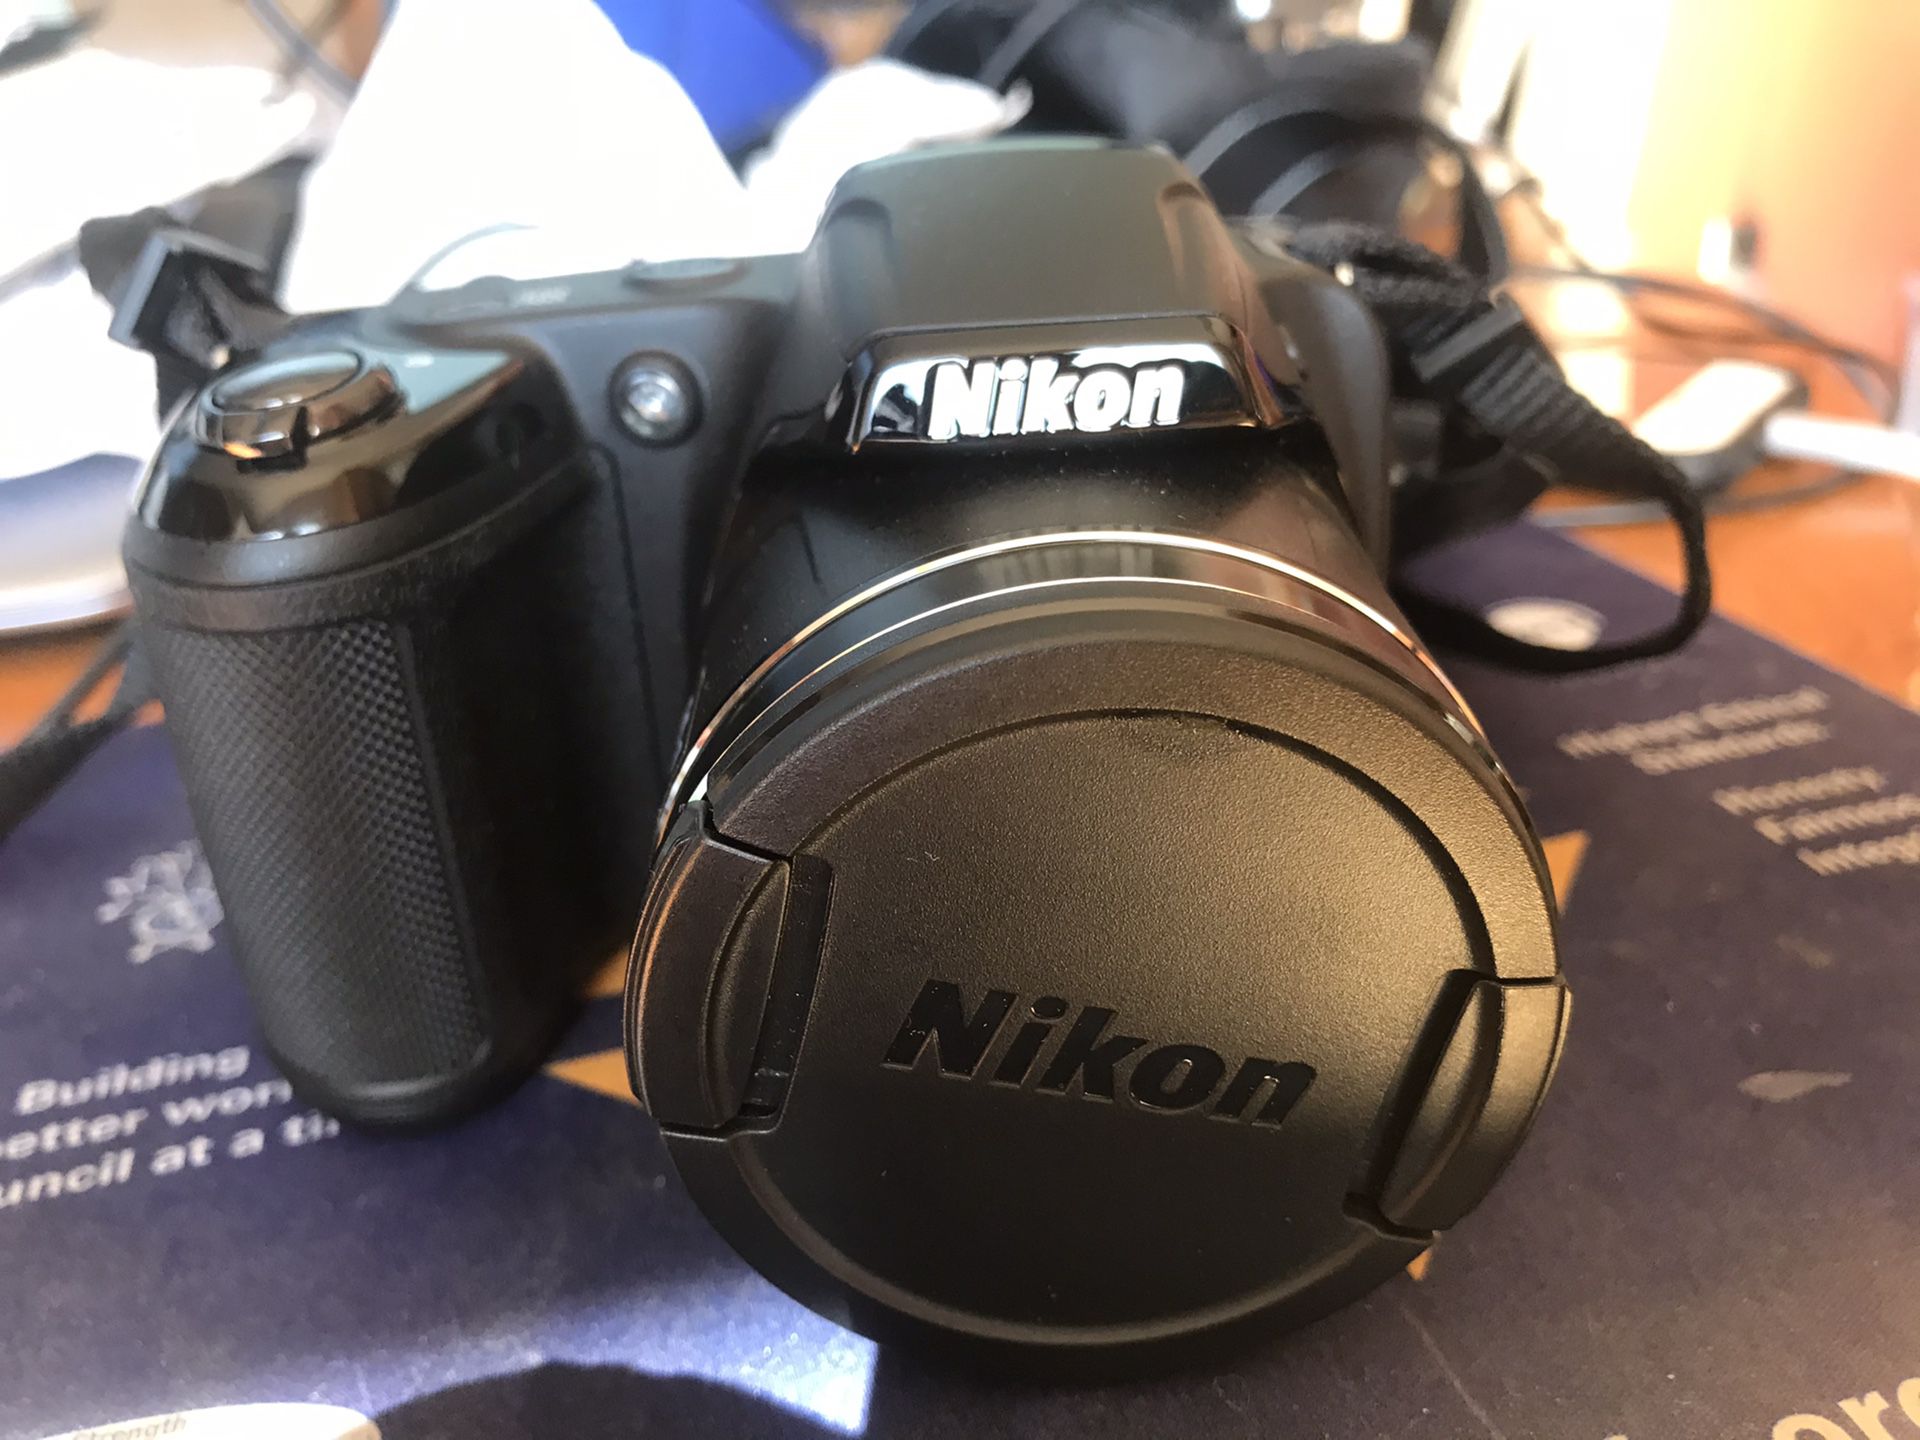 Nikon coolpix camera and case